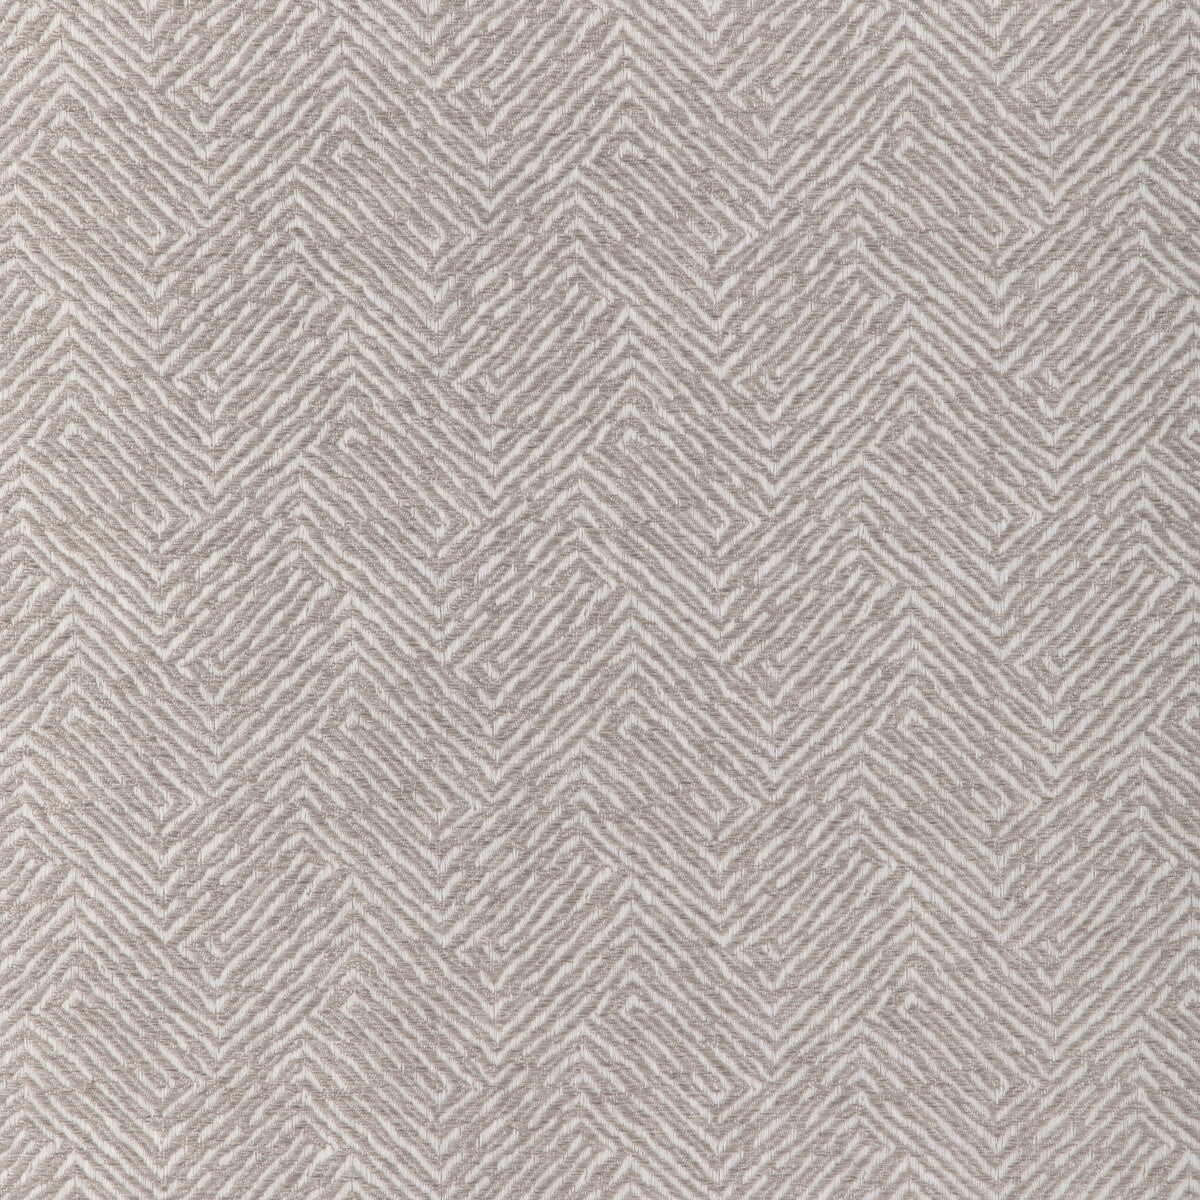 Kravet Smart fabric in 36667-1101 color - pattern 36667.1101.0 - by Kravet Smart in the Performance Kravetarmor collection